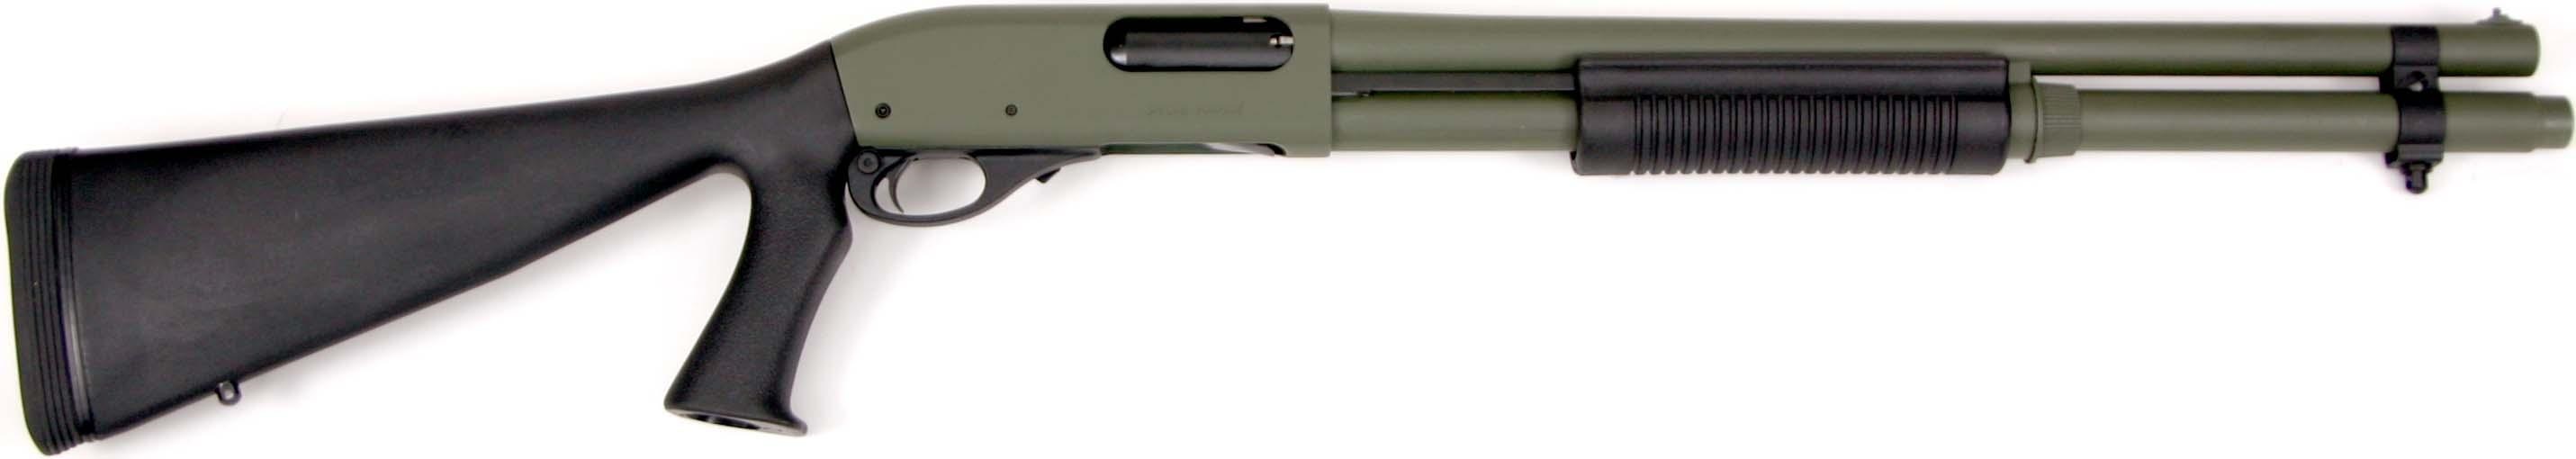 Remington 870 TACTICAL 12 Magnum